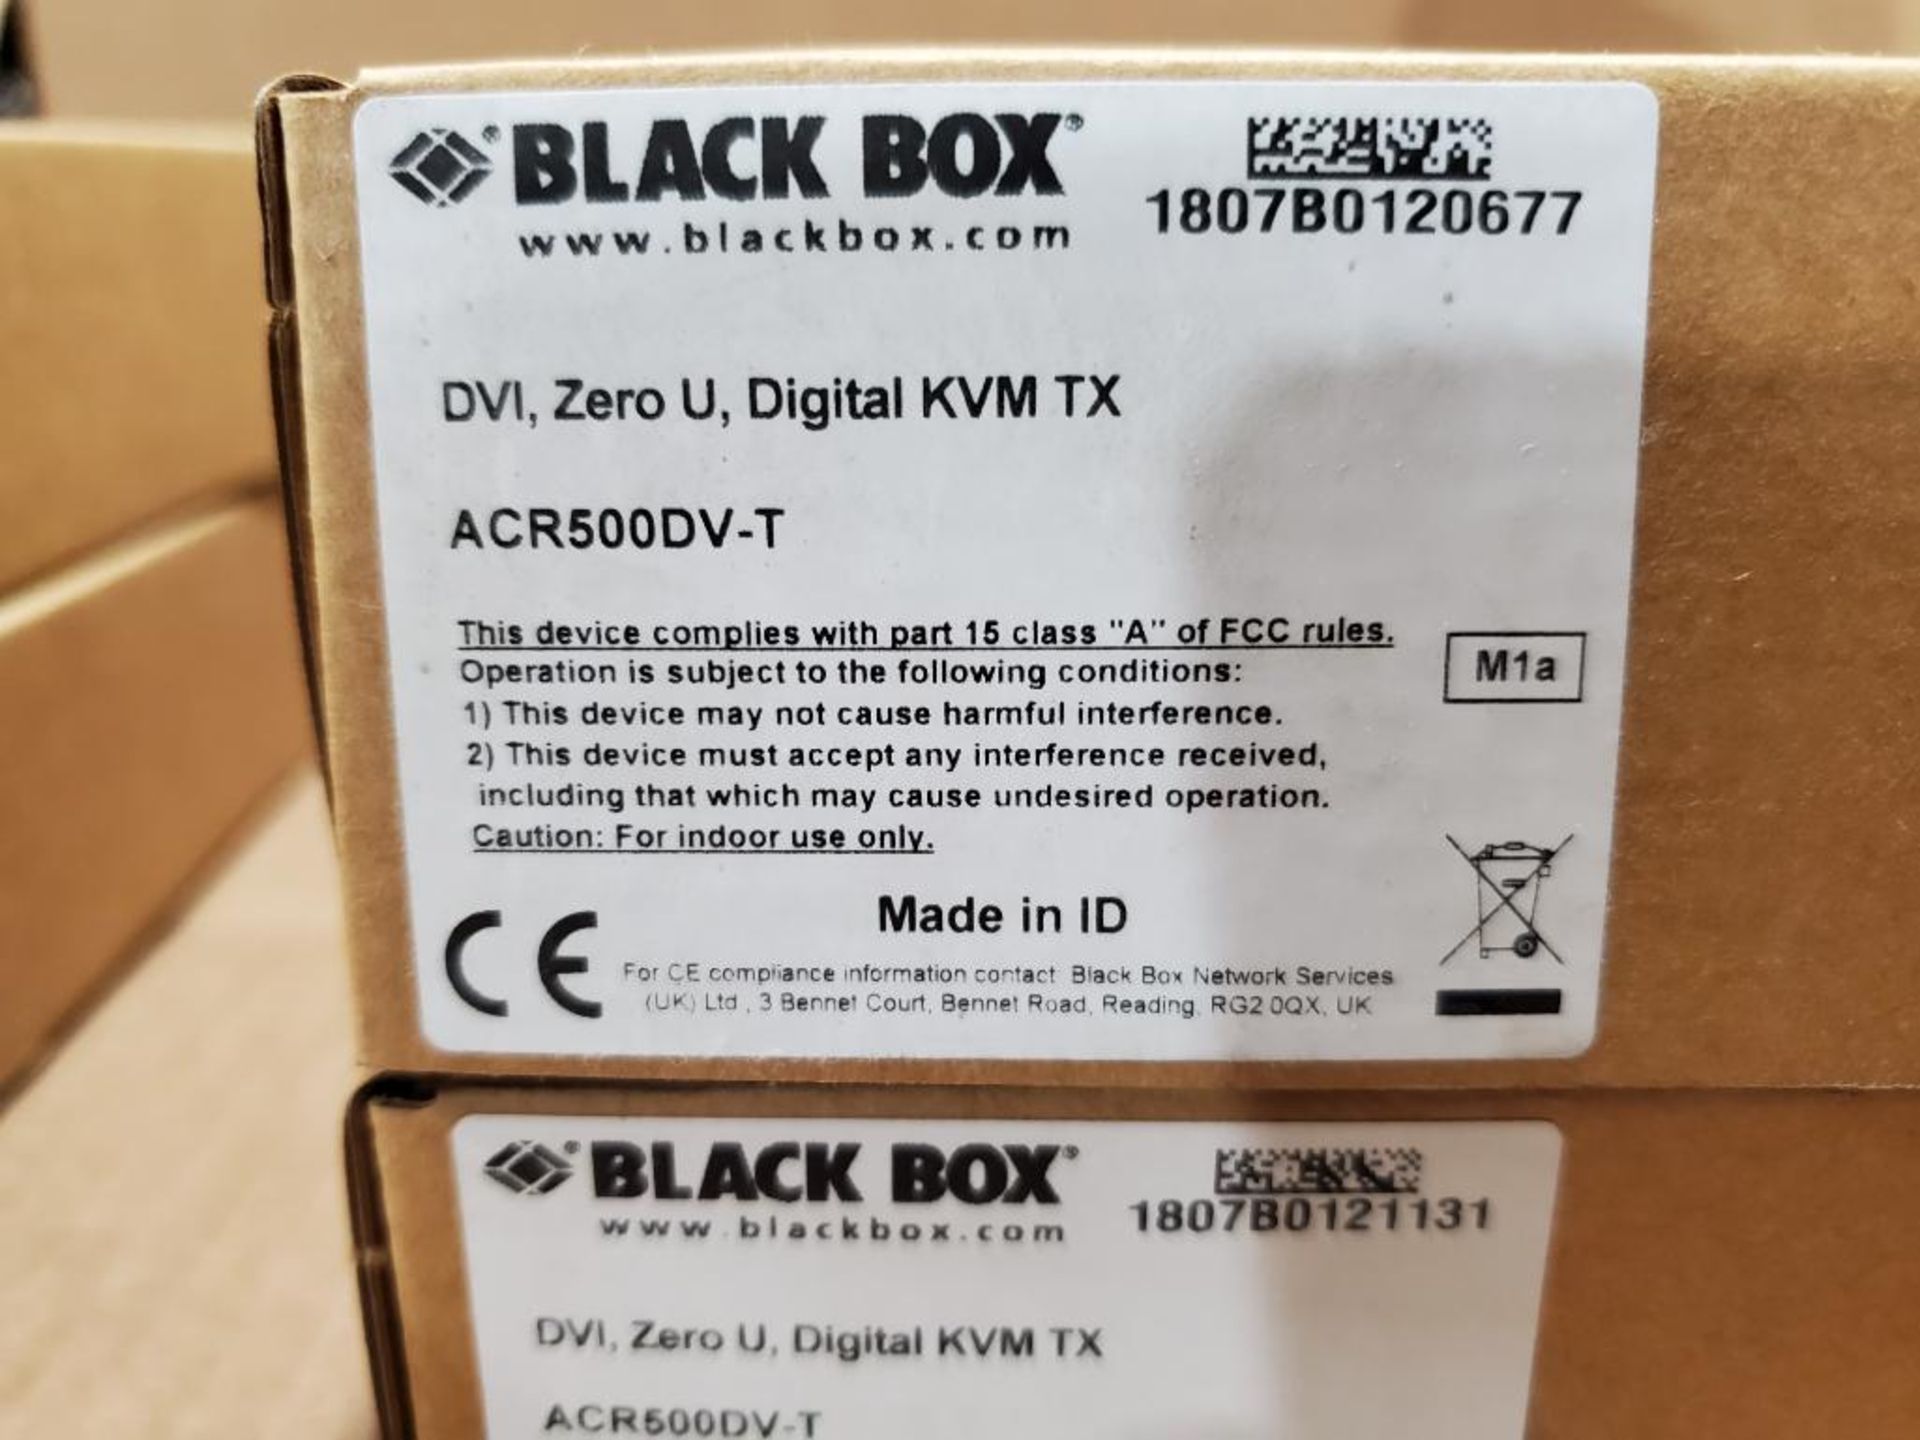 Qty 2 - Black Box DVI, Zero U, Digital KVM TX. Part number ACR500DV-T. - Image 2 of 3